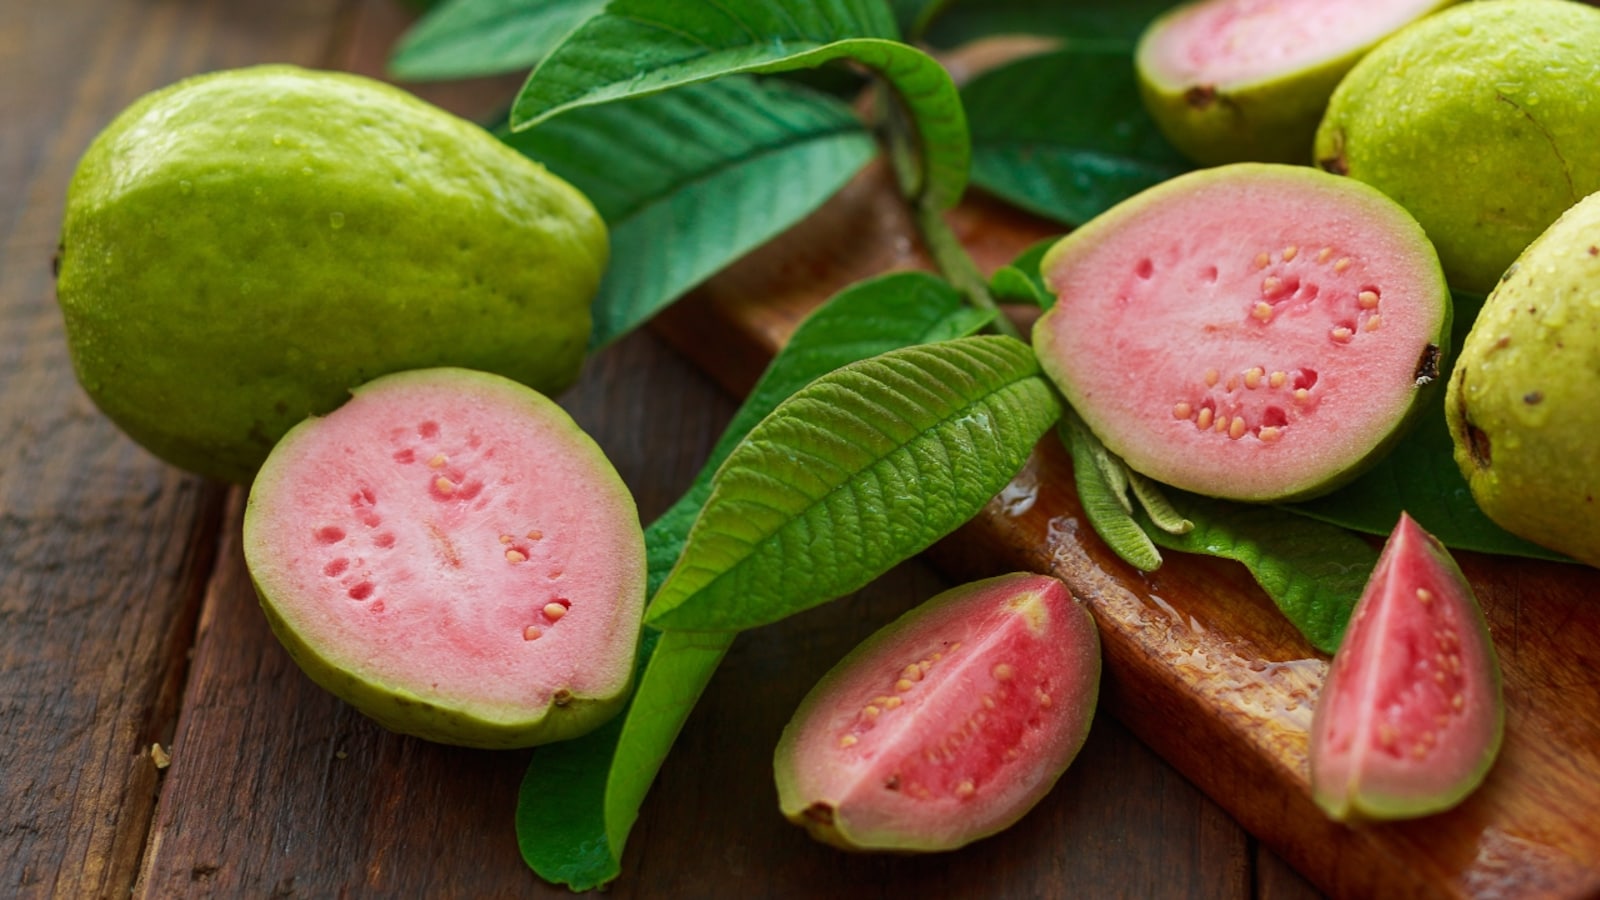 Health benefits of guava: